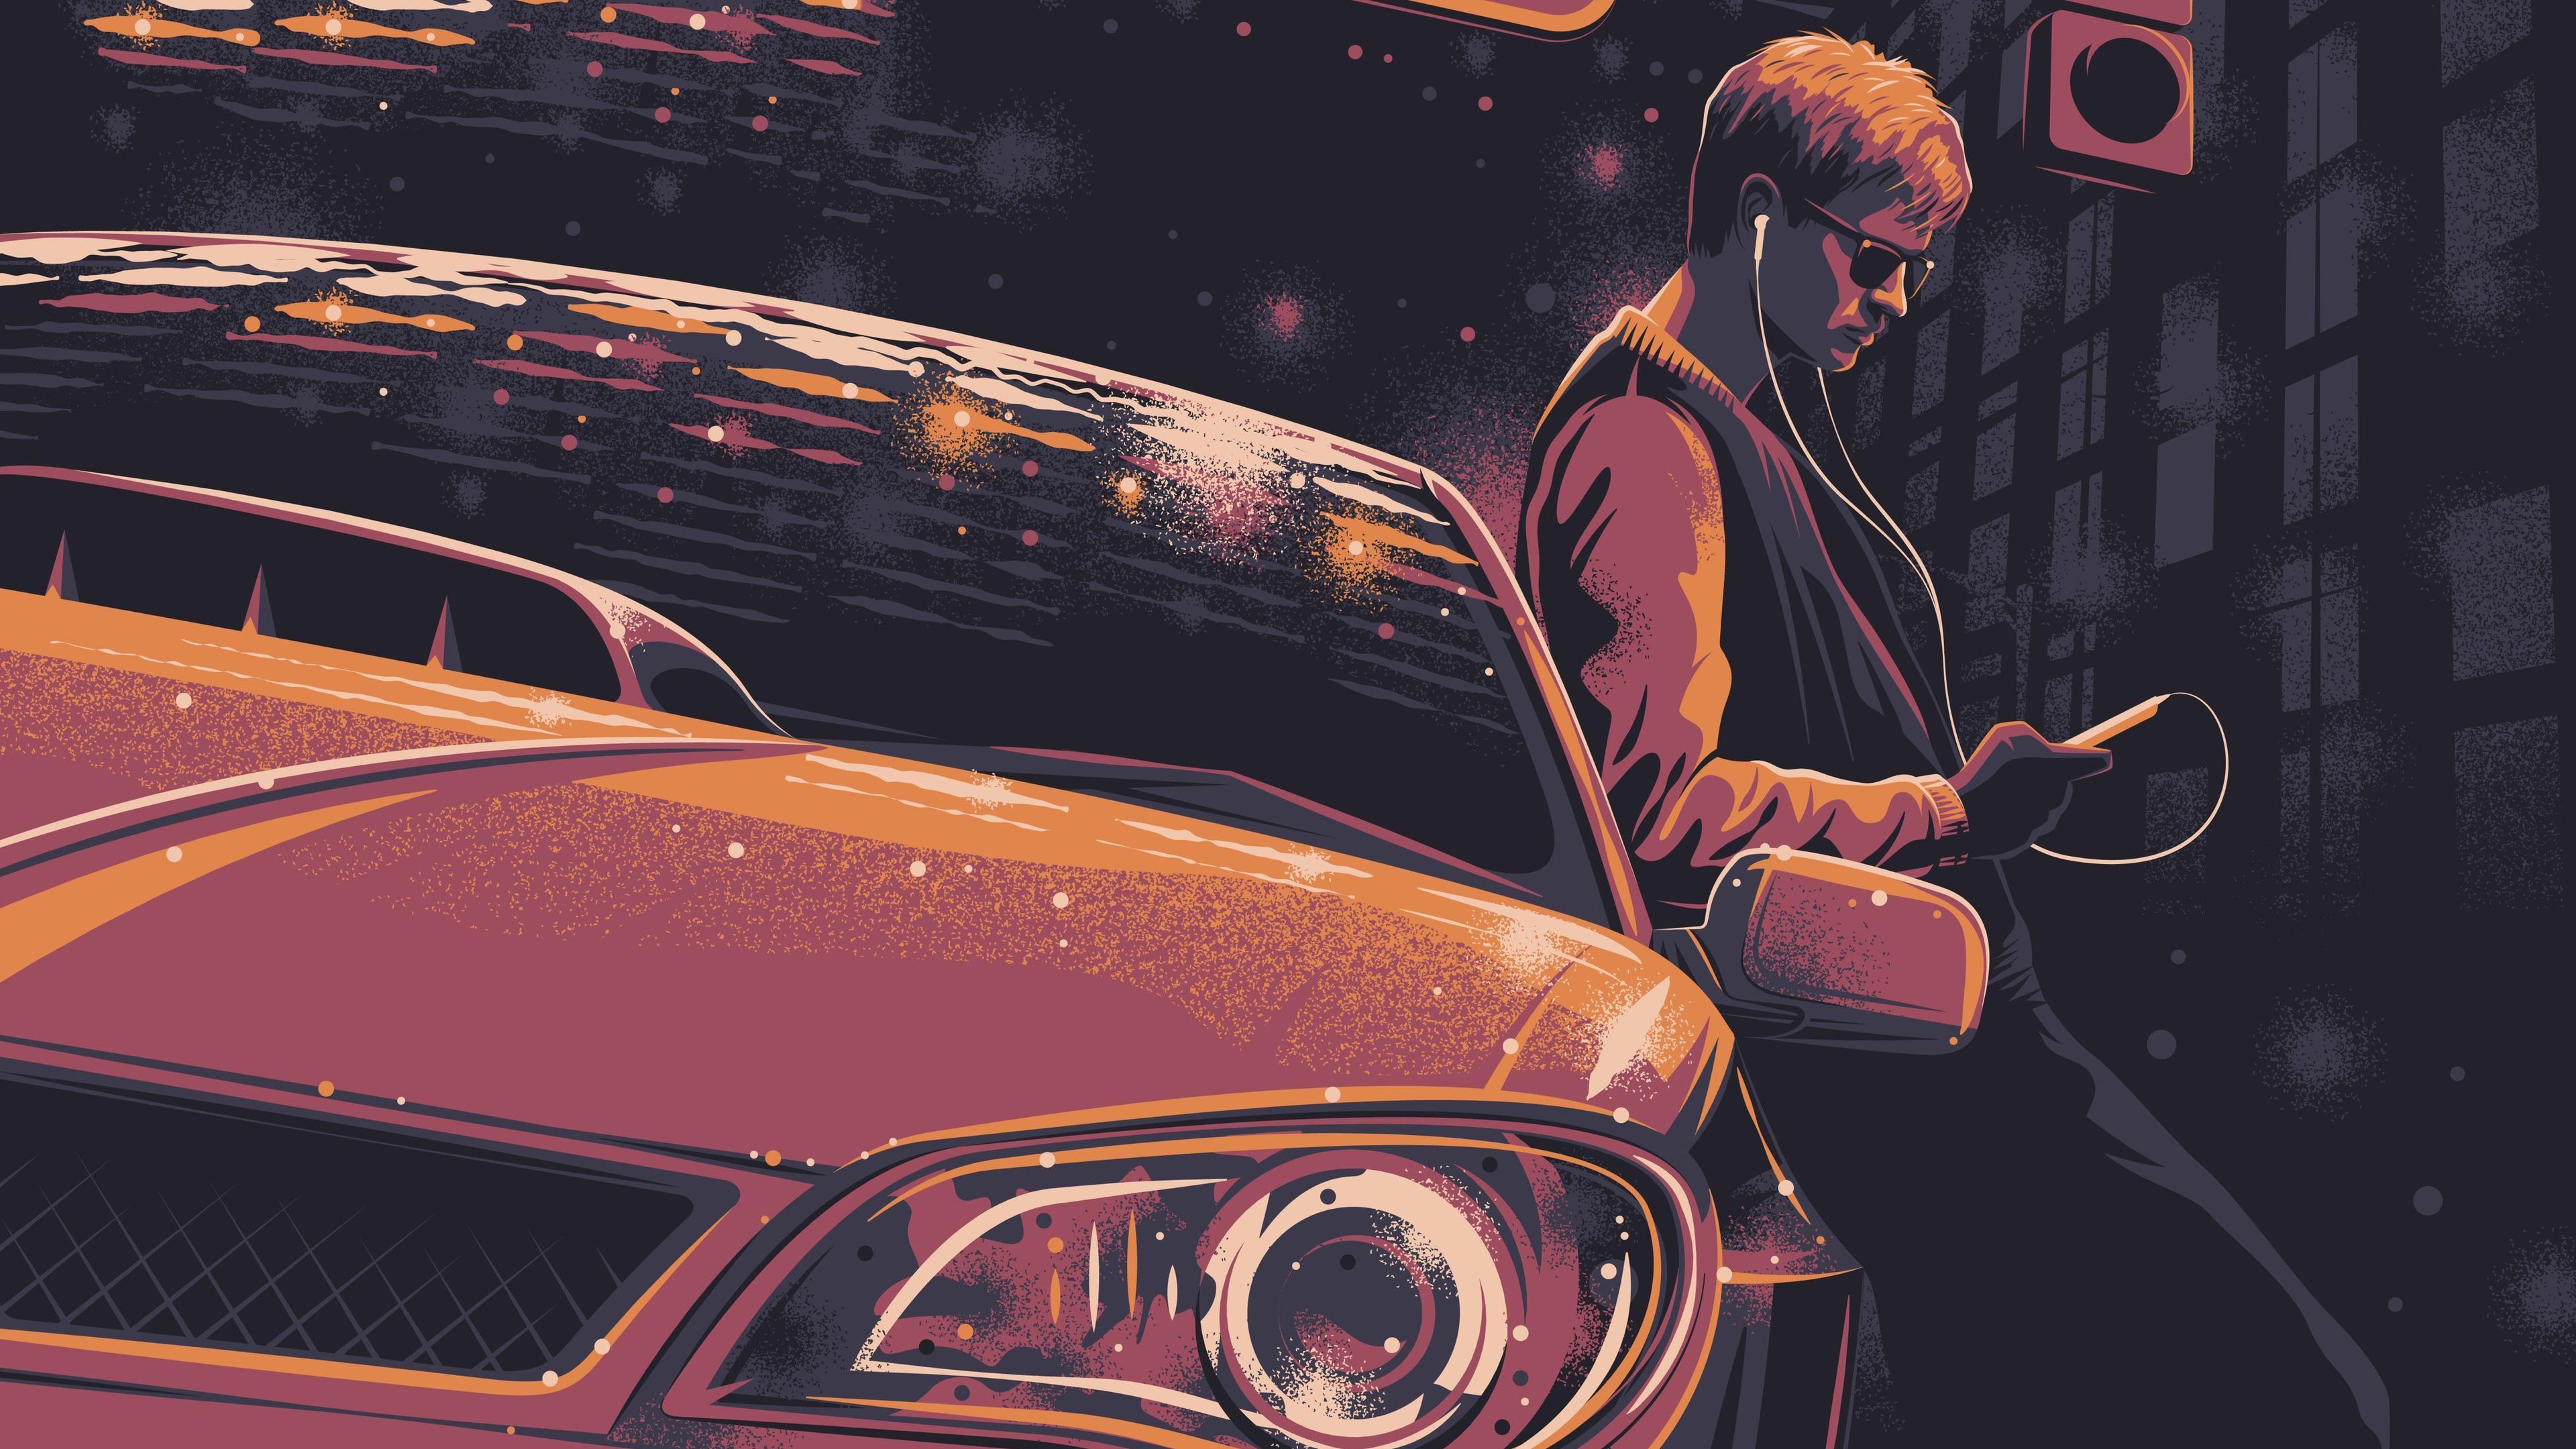 Baby Driver 4k Art movies wallpaper .com